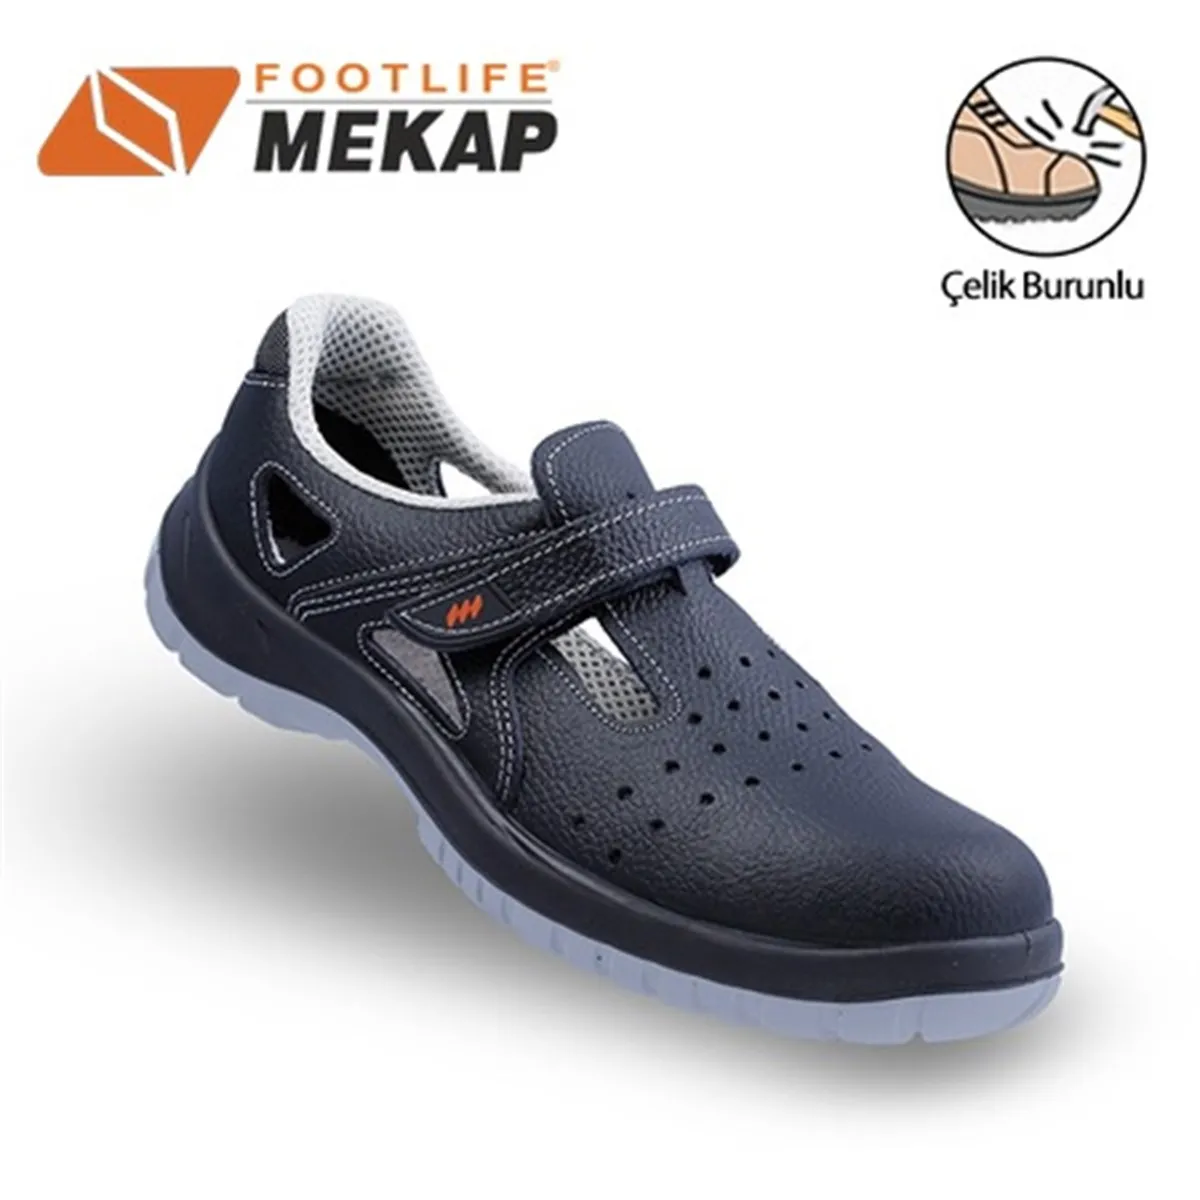 MEKAP 234 R Sandals Steel Toe Work Shoes,safety shoes ,work shoes, work shoe , safety shoes, src , non-slip shoes, resistant sho